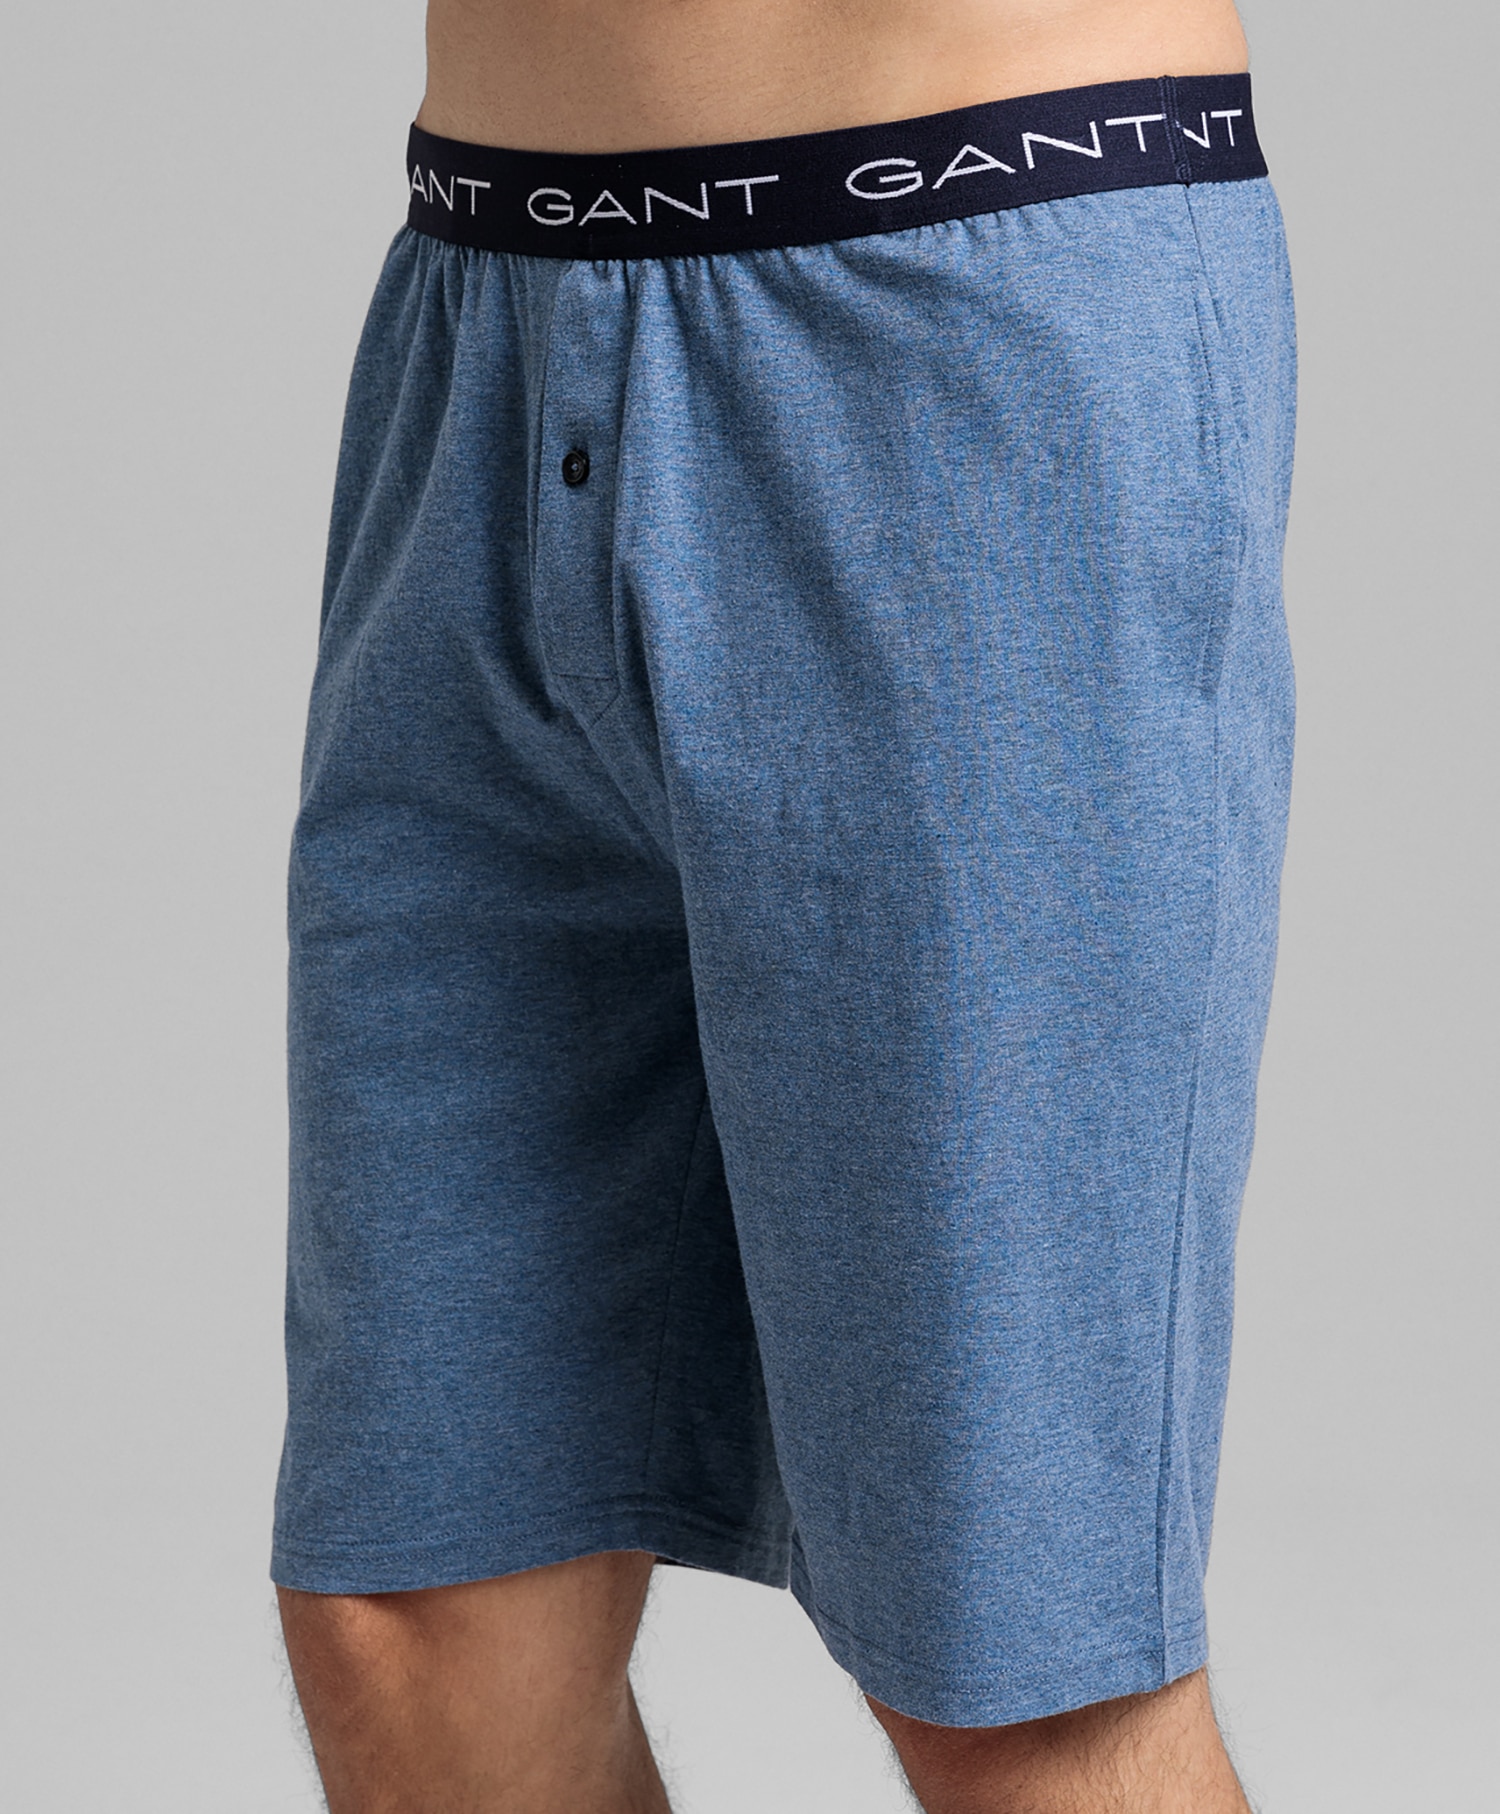 Gant bomulls shorts